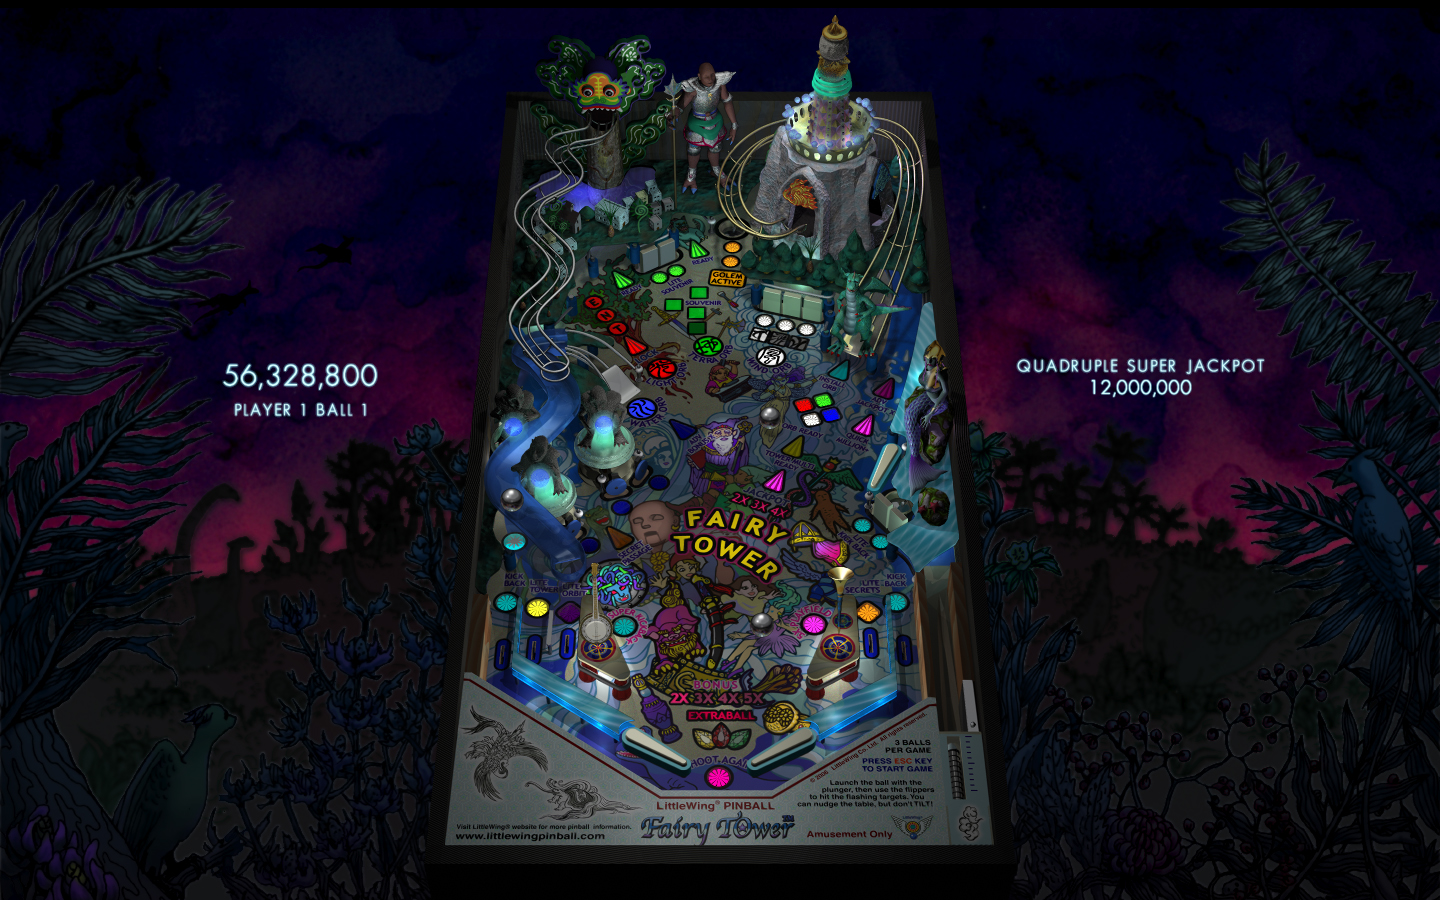 littleWing pinball fairy tower game screen